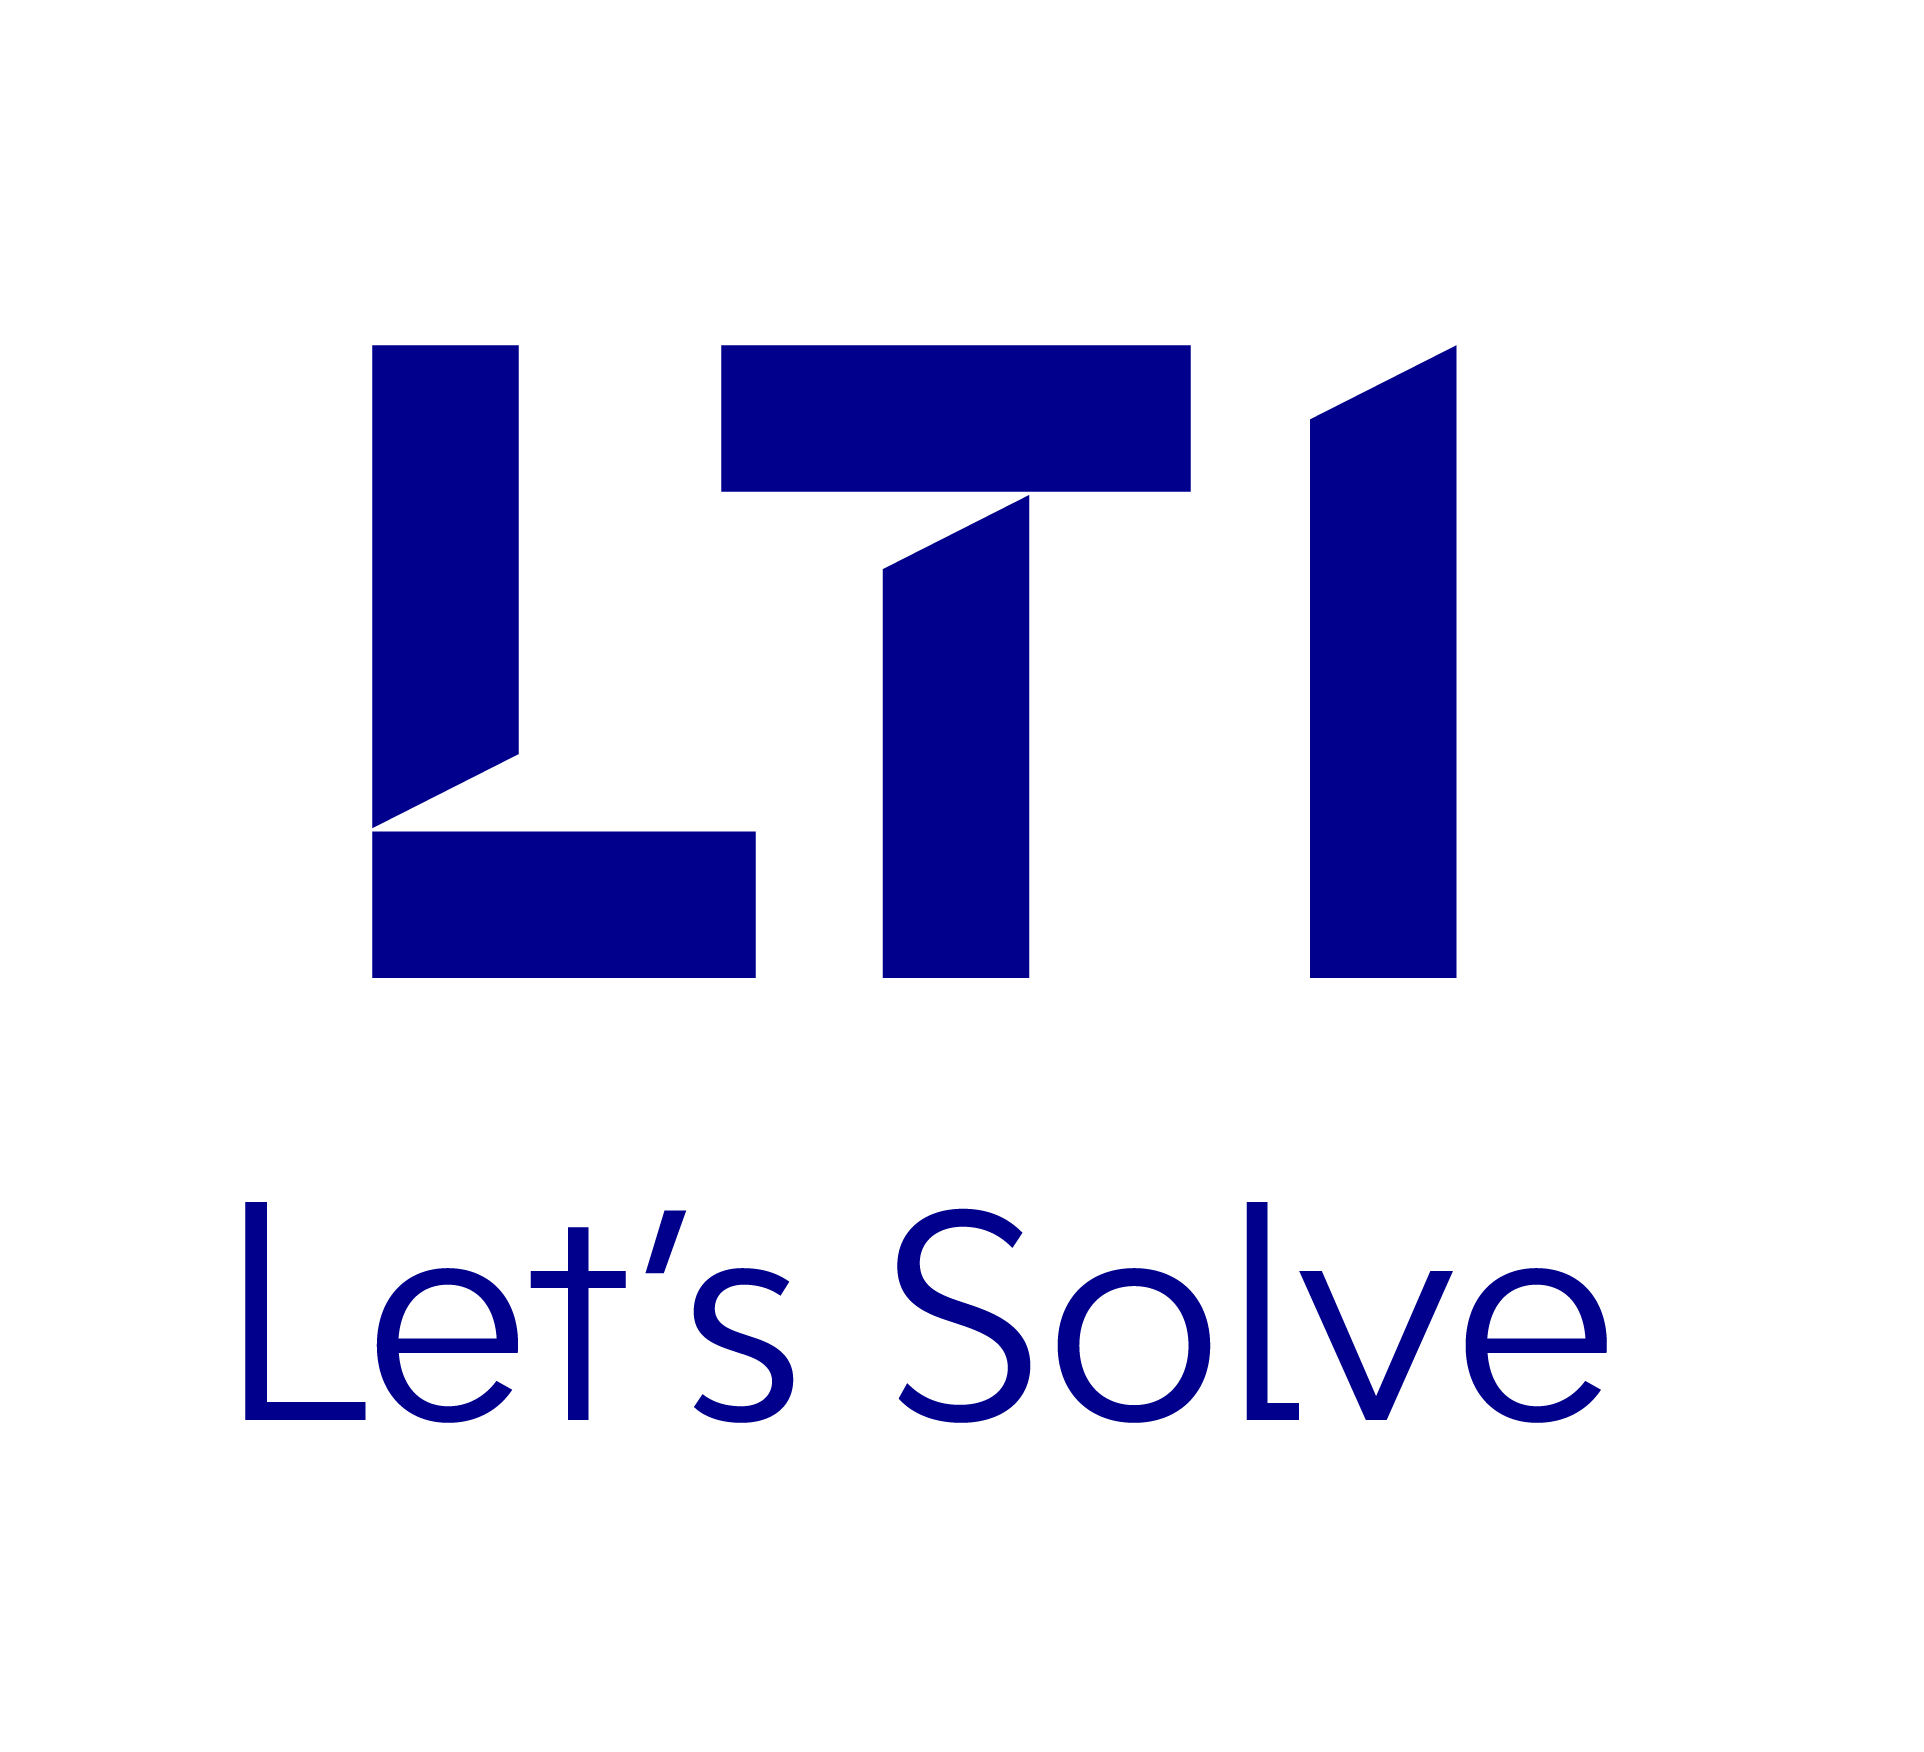  About LTI - About LTI and Newgen Partnership